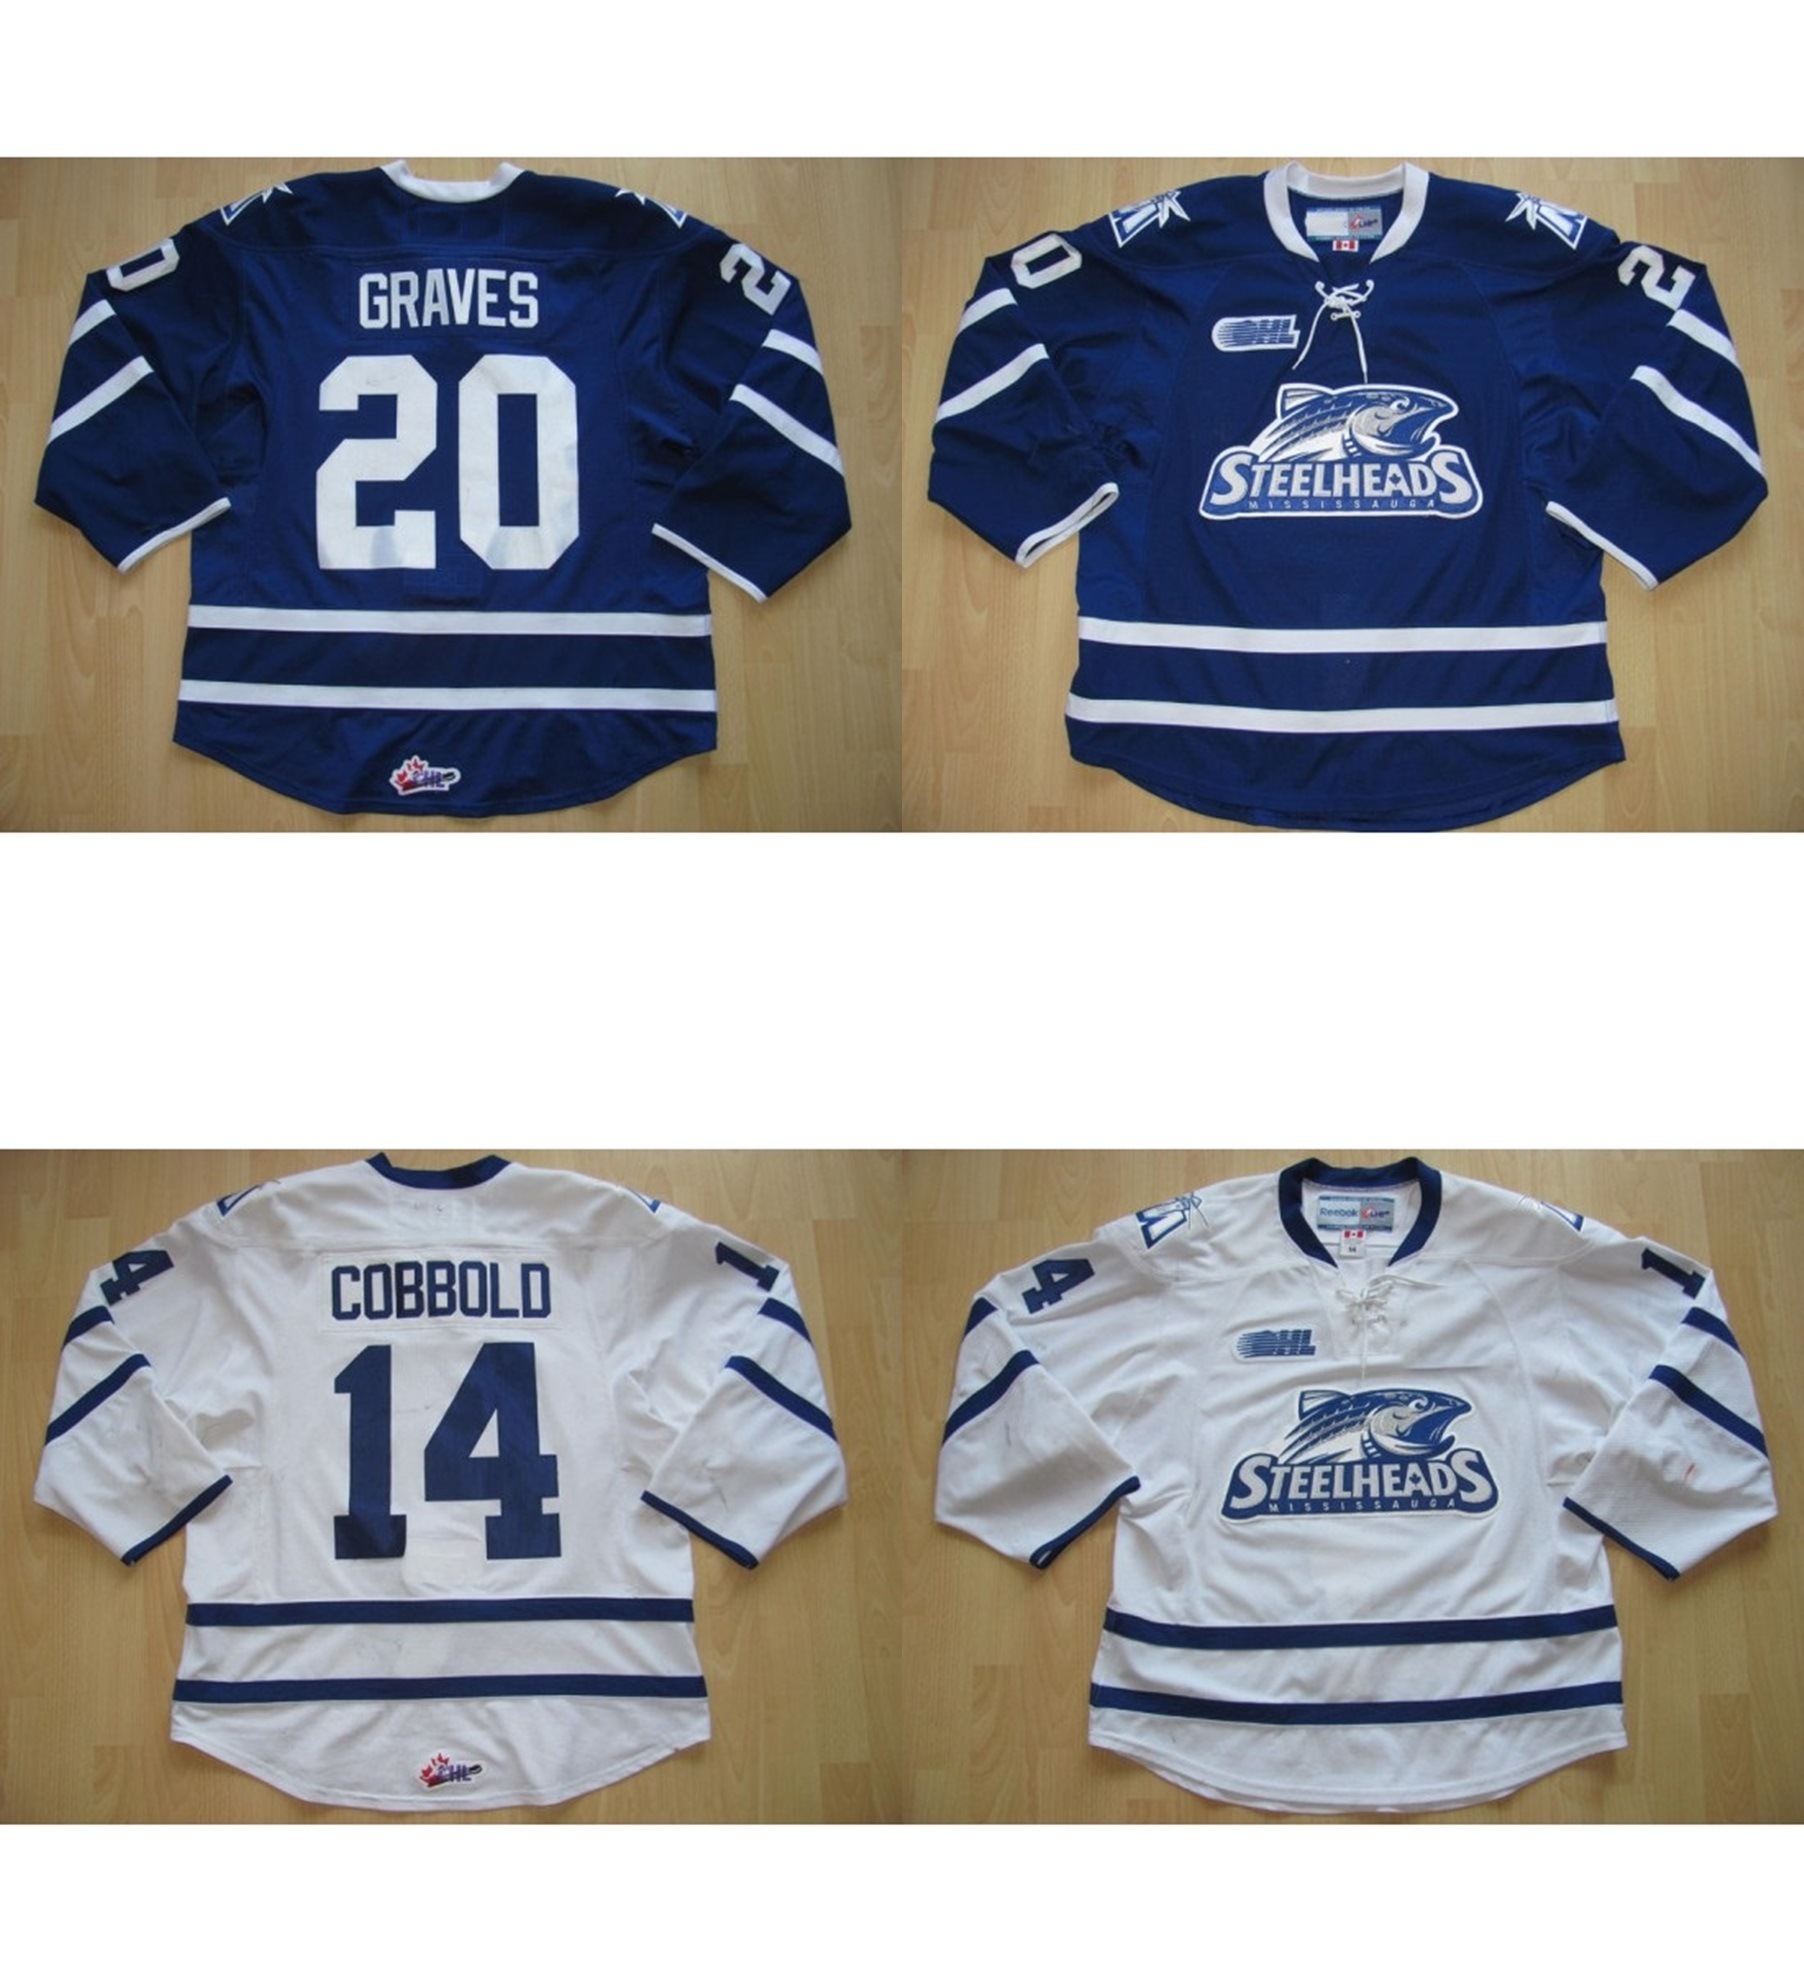 Customize Ohl Mississauga Steelheads Cobbold Graves Hockey Jersey